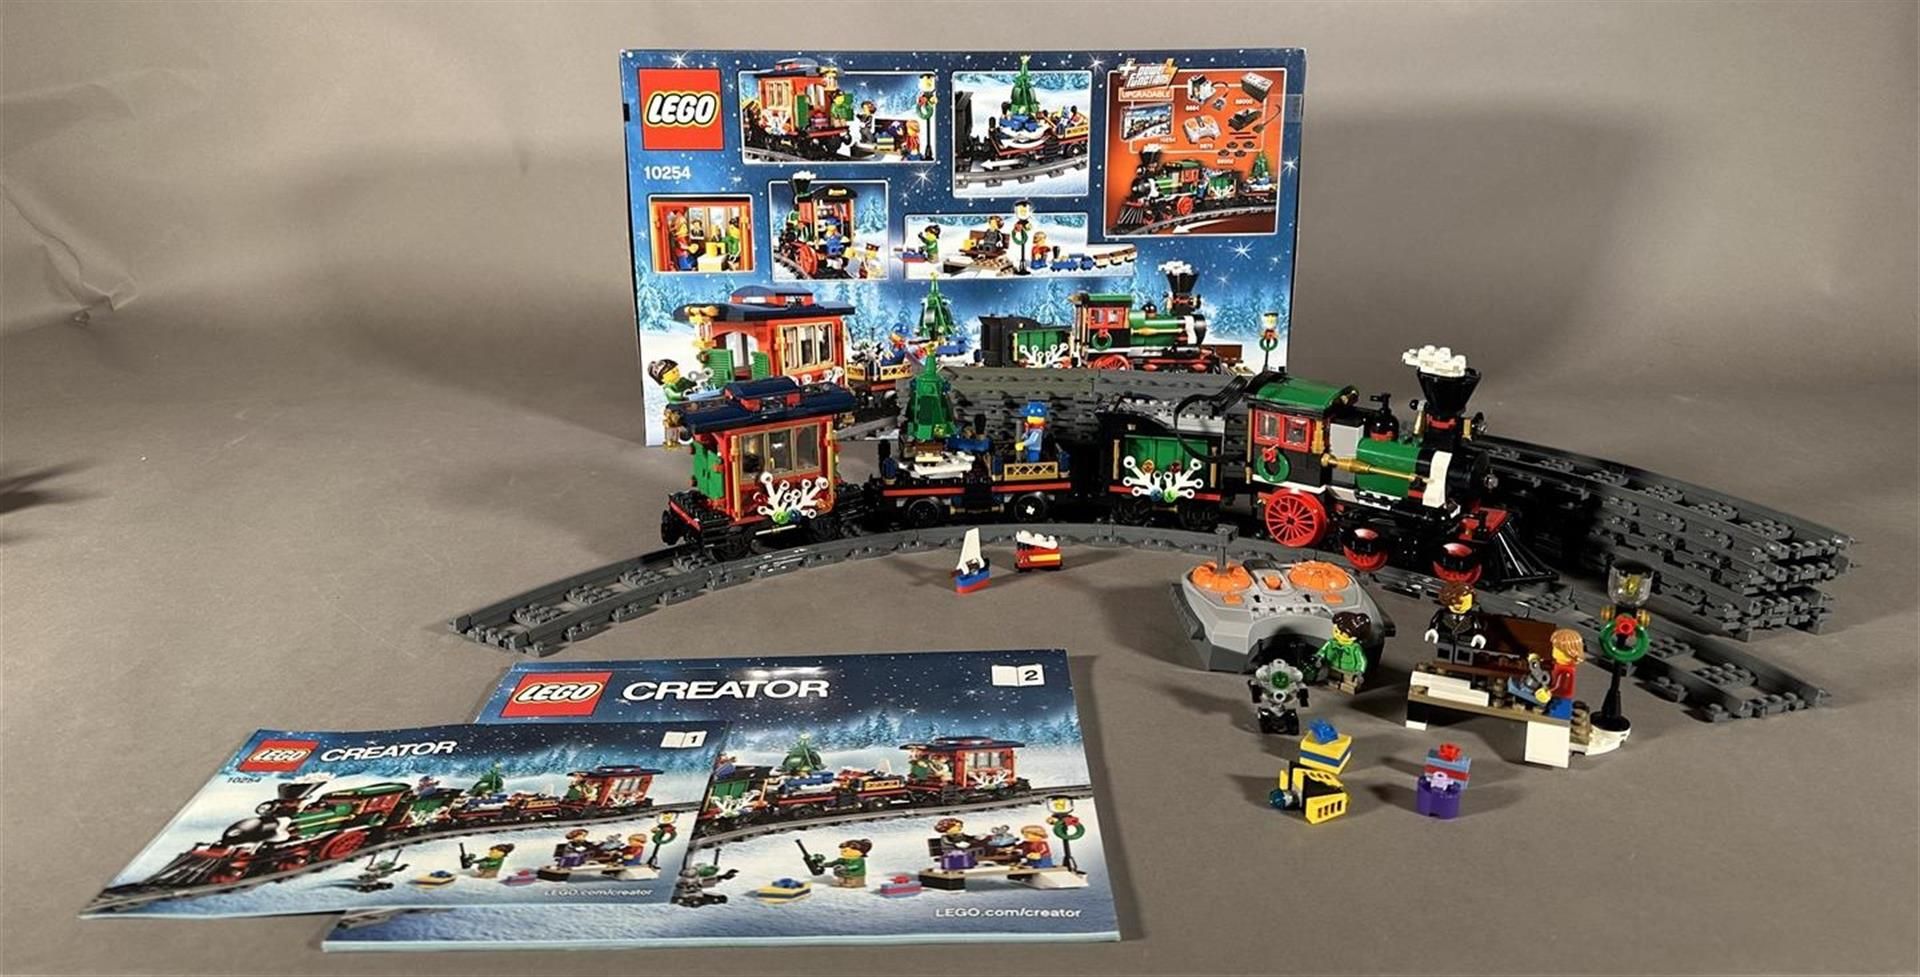 LEGO 10254 Winter Holiday Train.